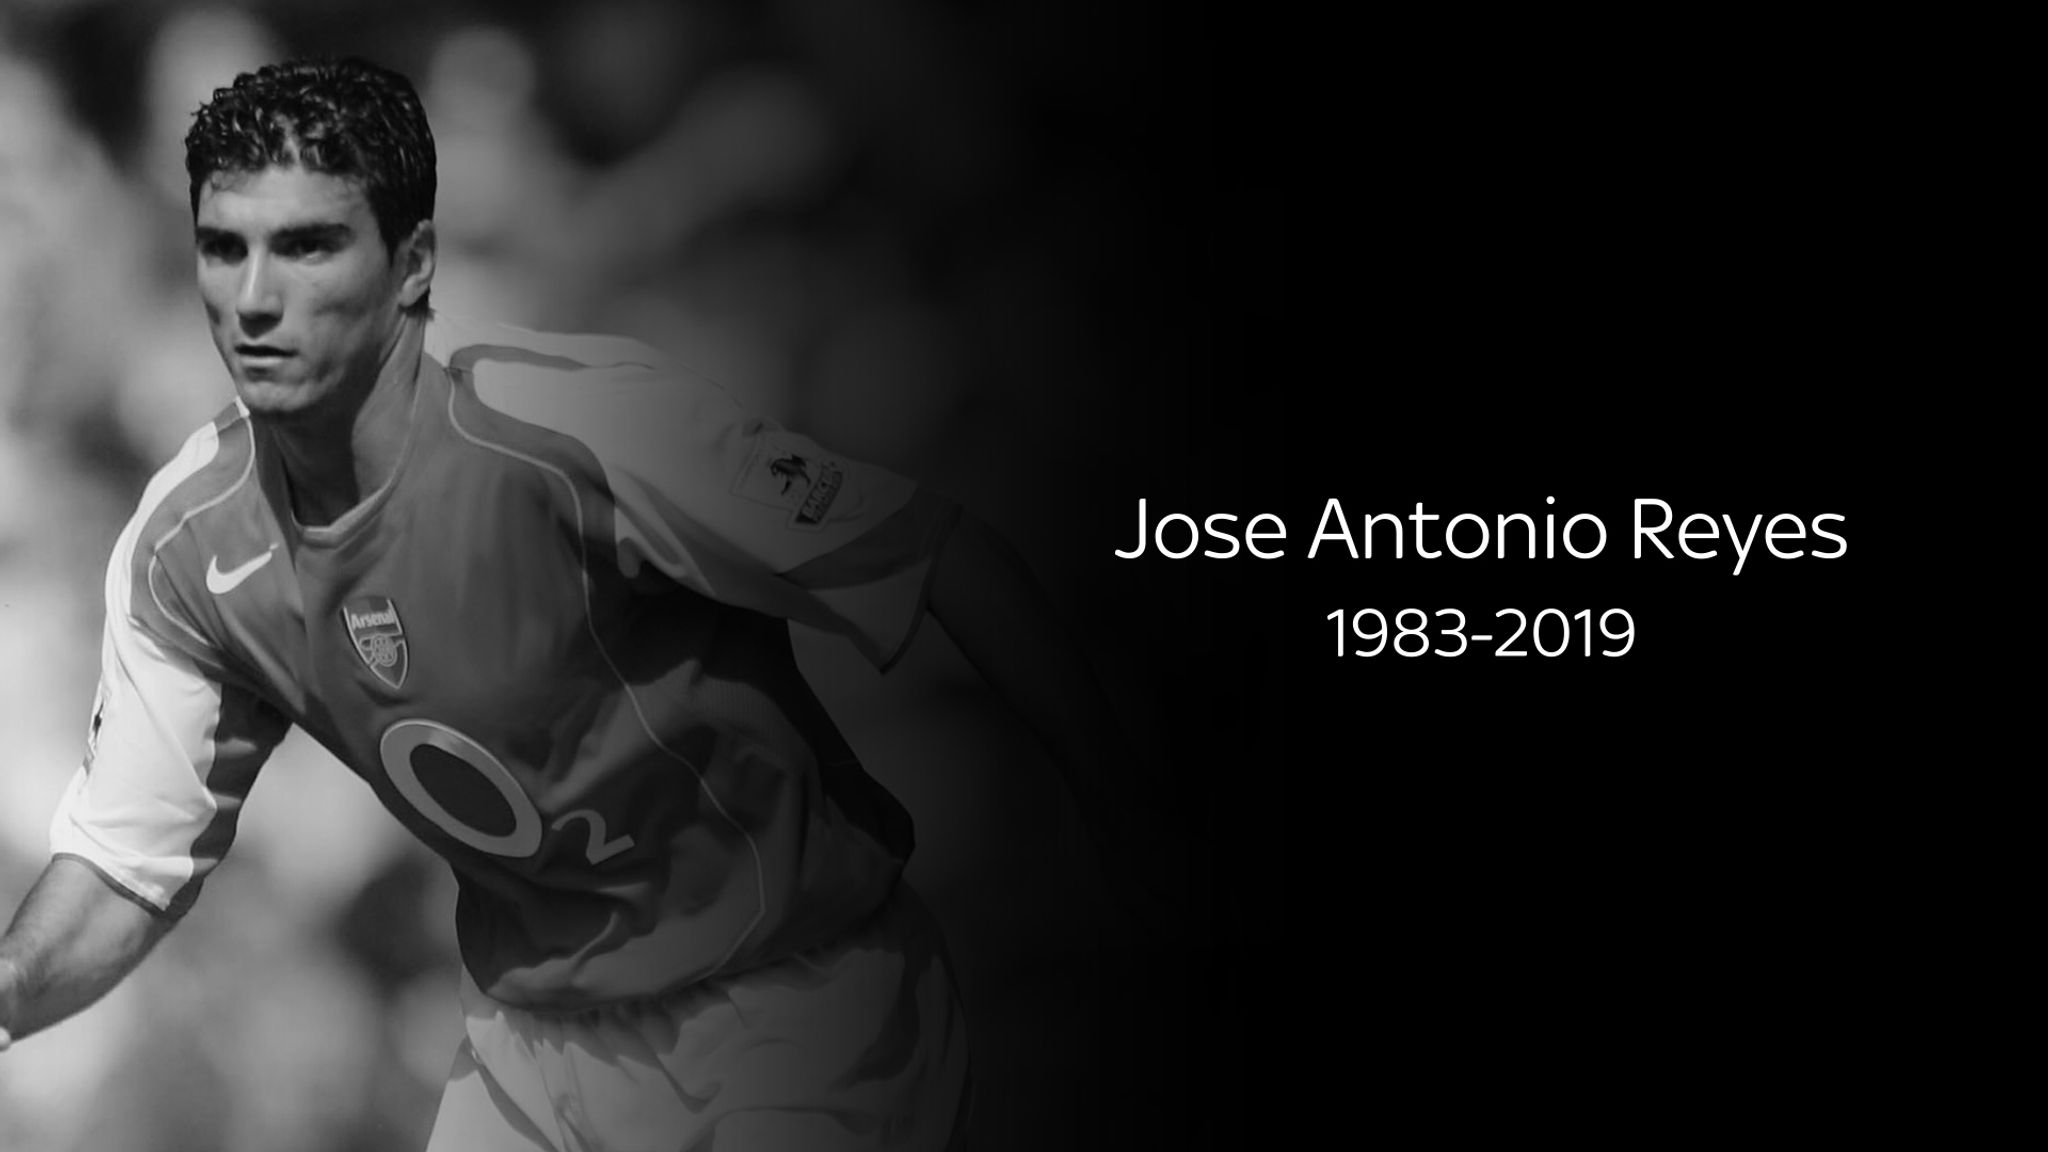 José Antonio Reyes - Player profile